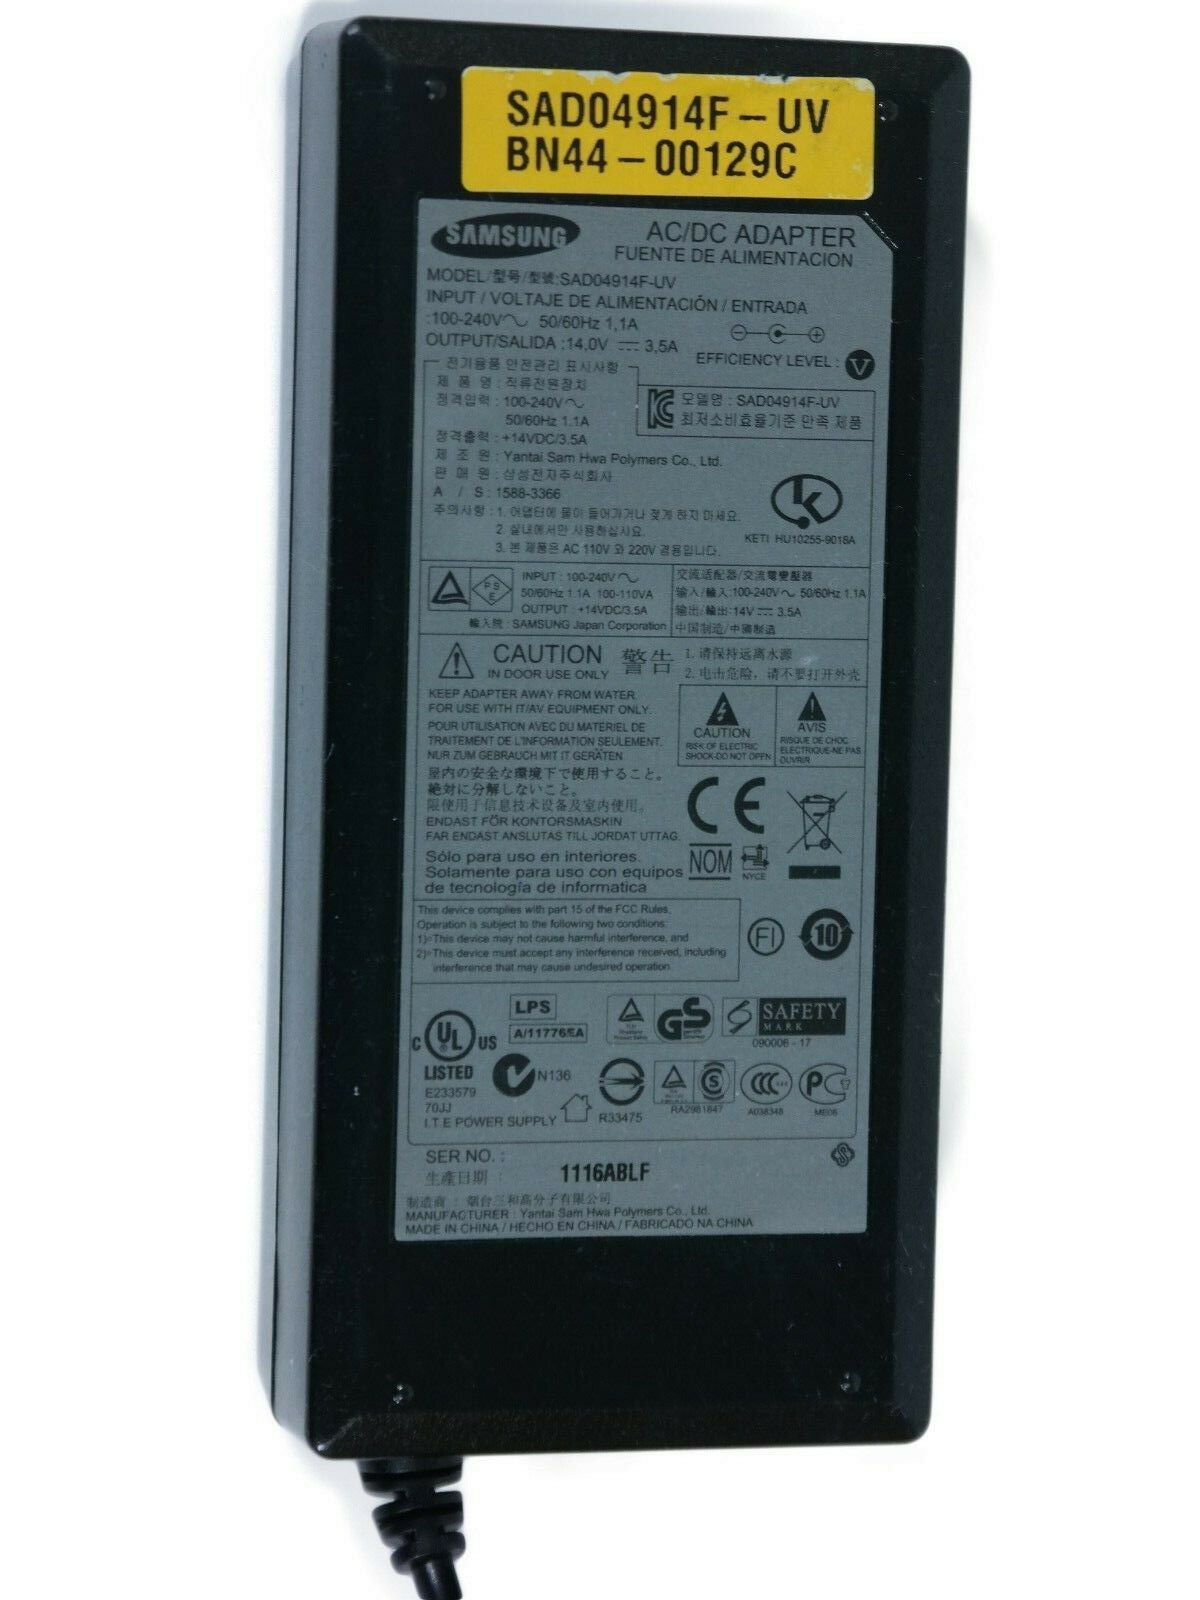 NEW 14.0V 3.5A AC Adapter Power Supply for Samsung SAD04914F-UV LCD monitor